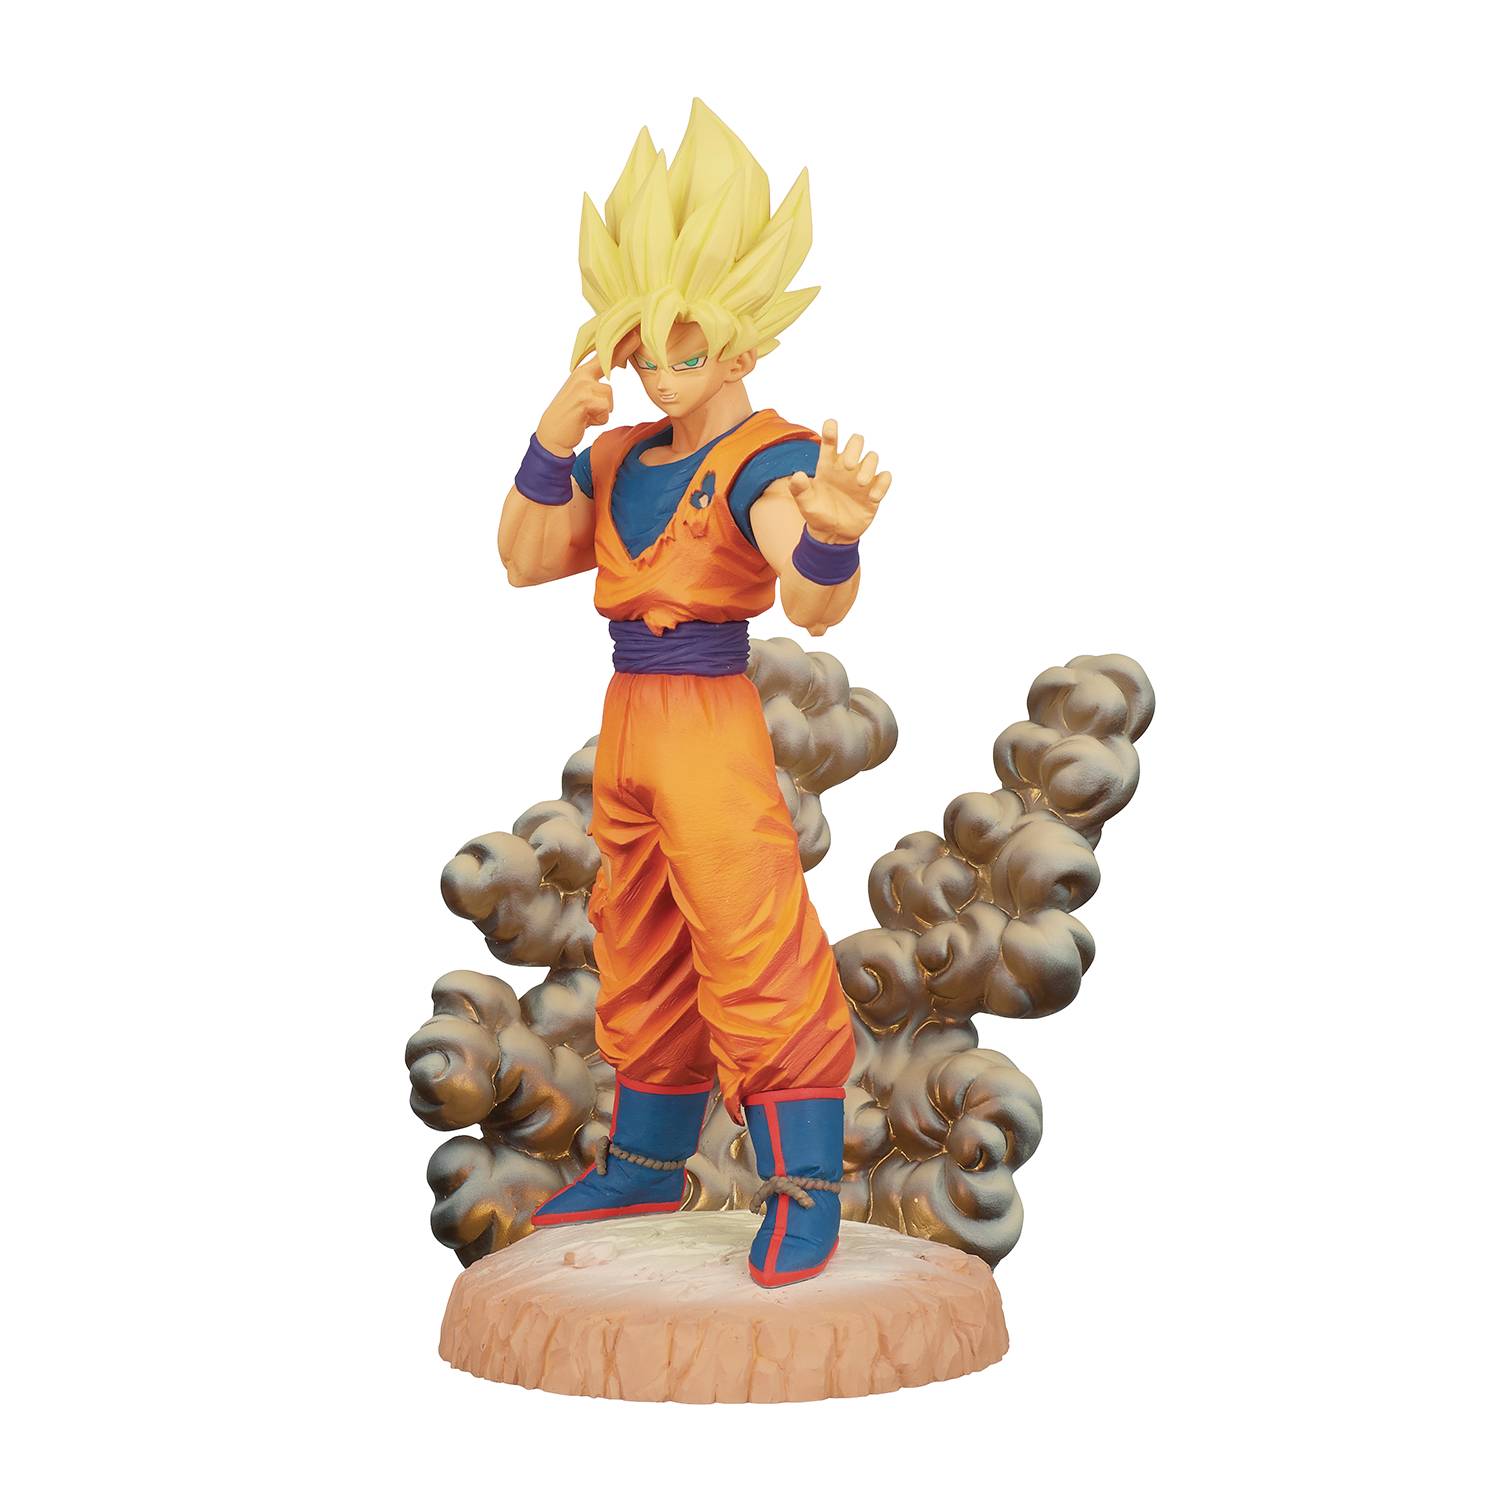 Anime Dragon Ball Z Son Goku Figure Model Super Saiyan Cell Saga 30CM nobox!